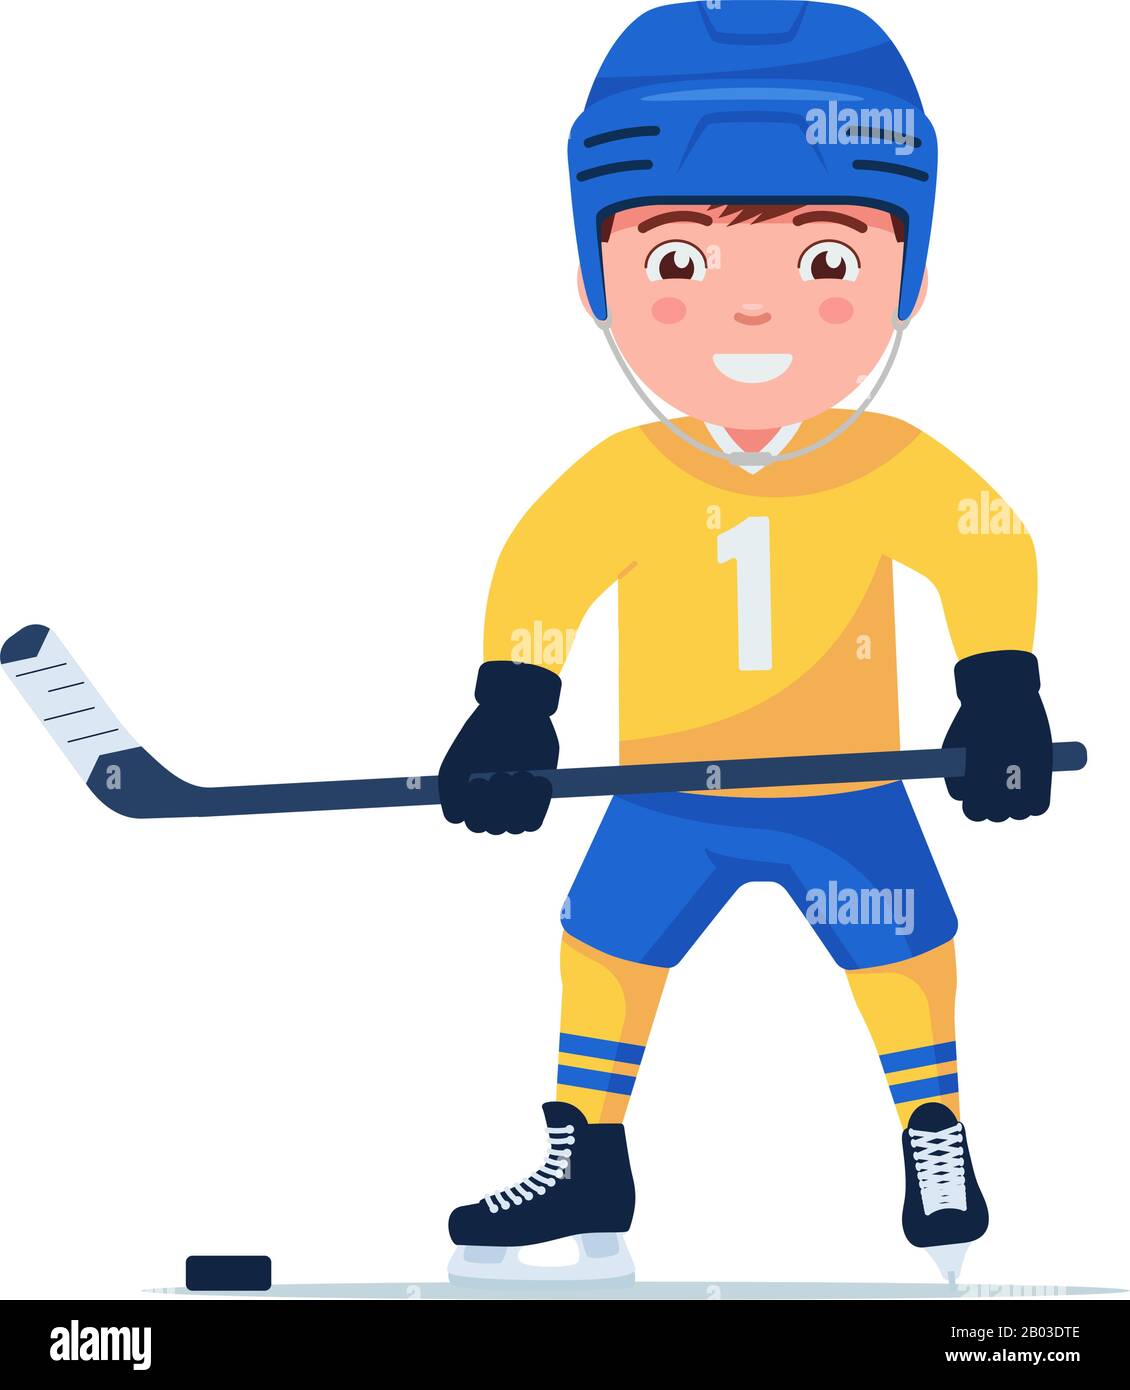 Single one line drawing ice hockey stick. Hockey puck stick, sport